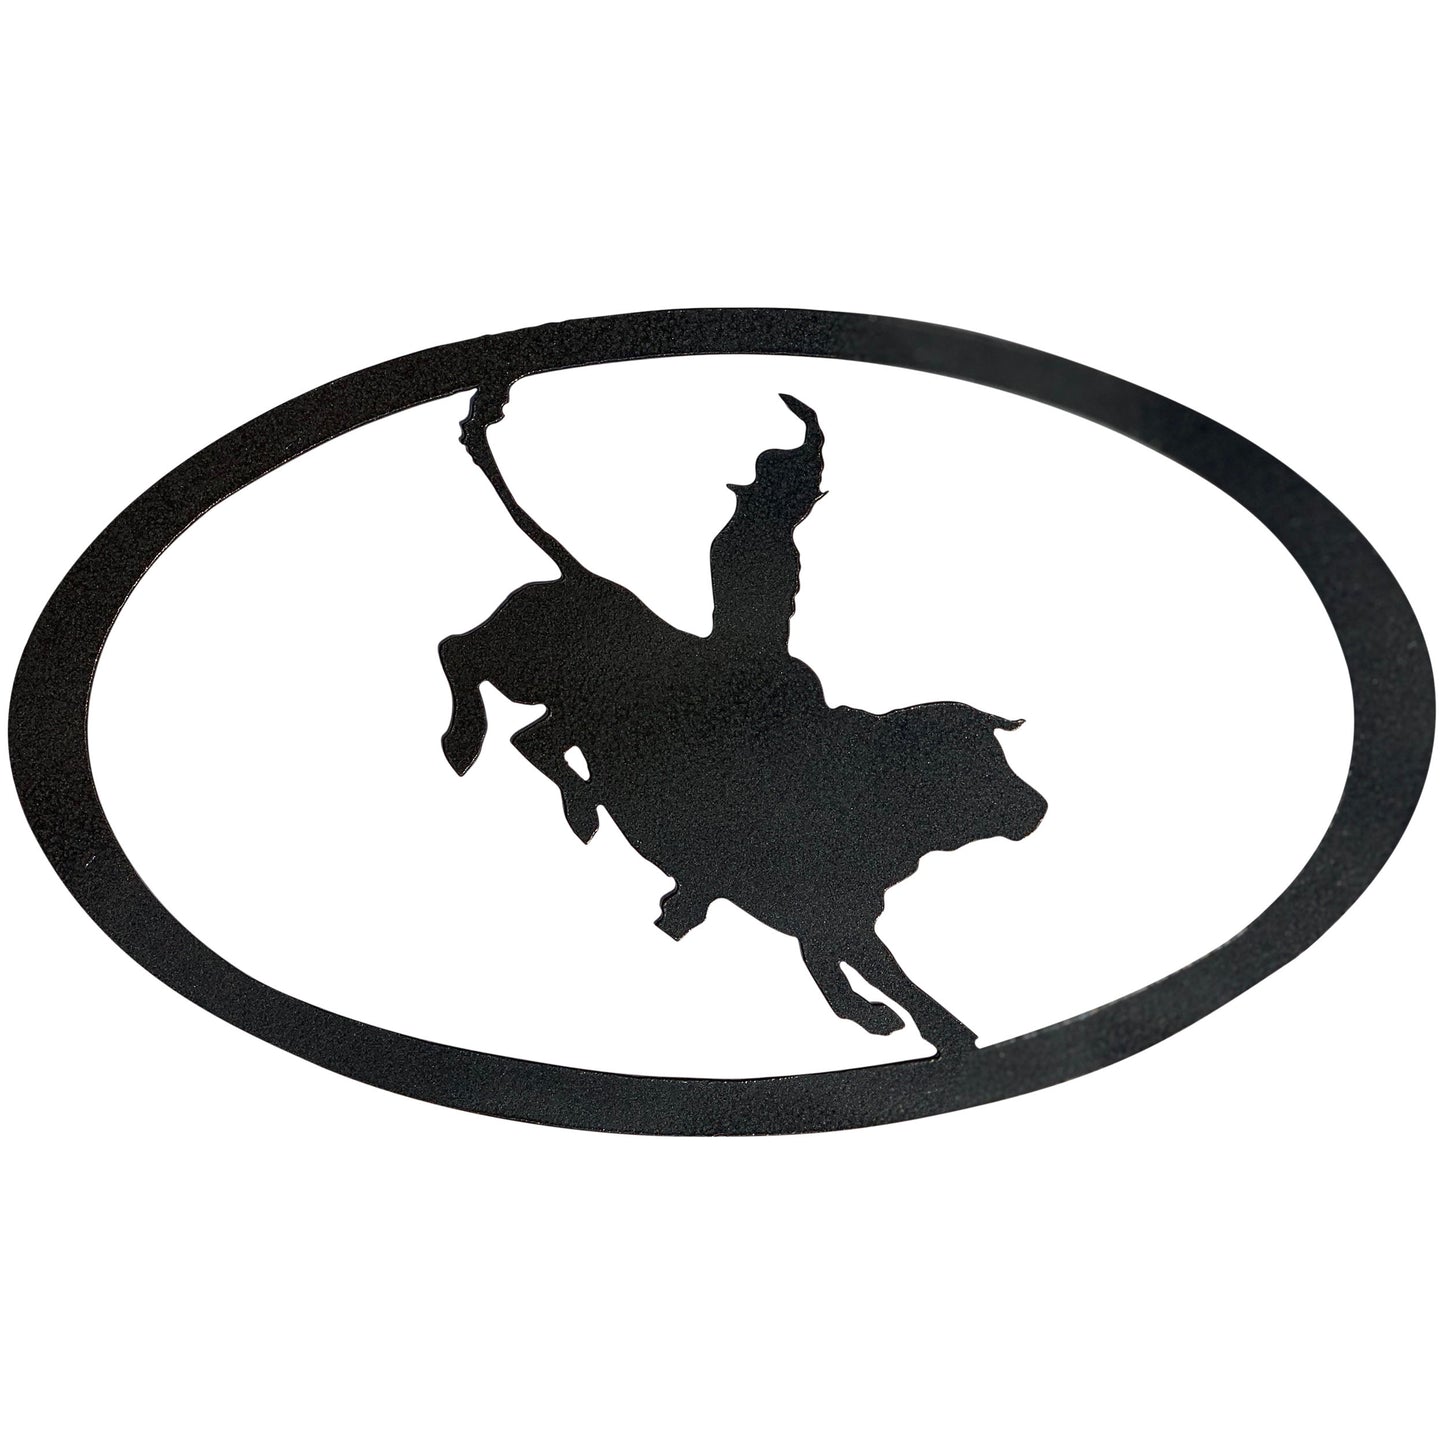 Bull-Rider Themed Oval Decor